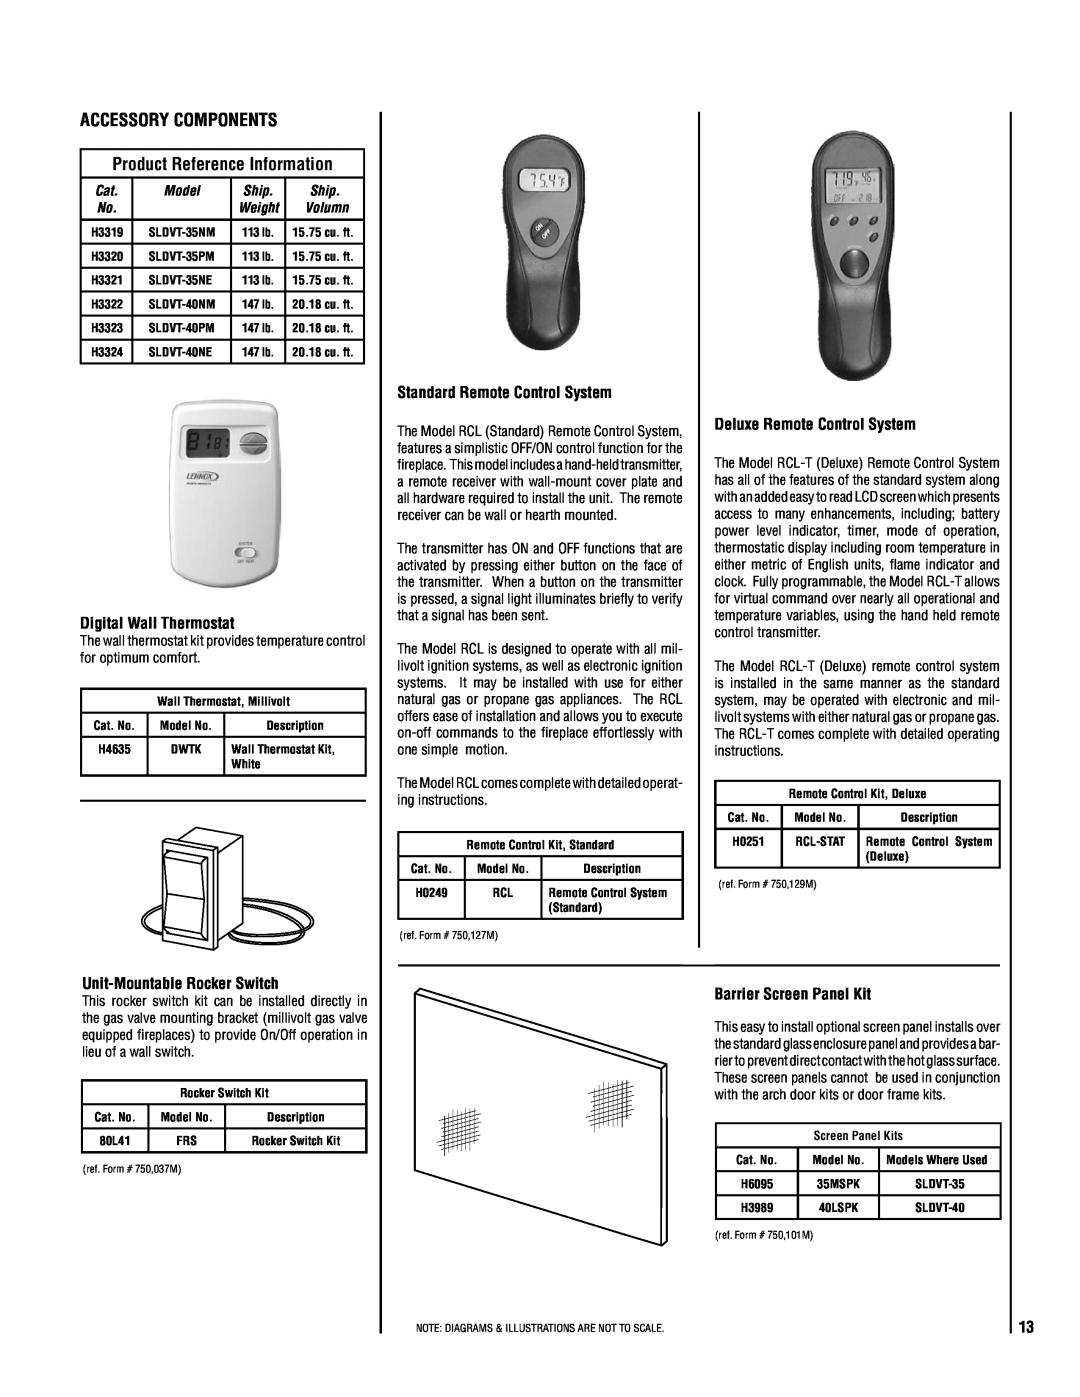 TOA Electronics SLDVT-35, SLDVT-40 manual Accessory Components, Product Reference Information, Model, Ship 